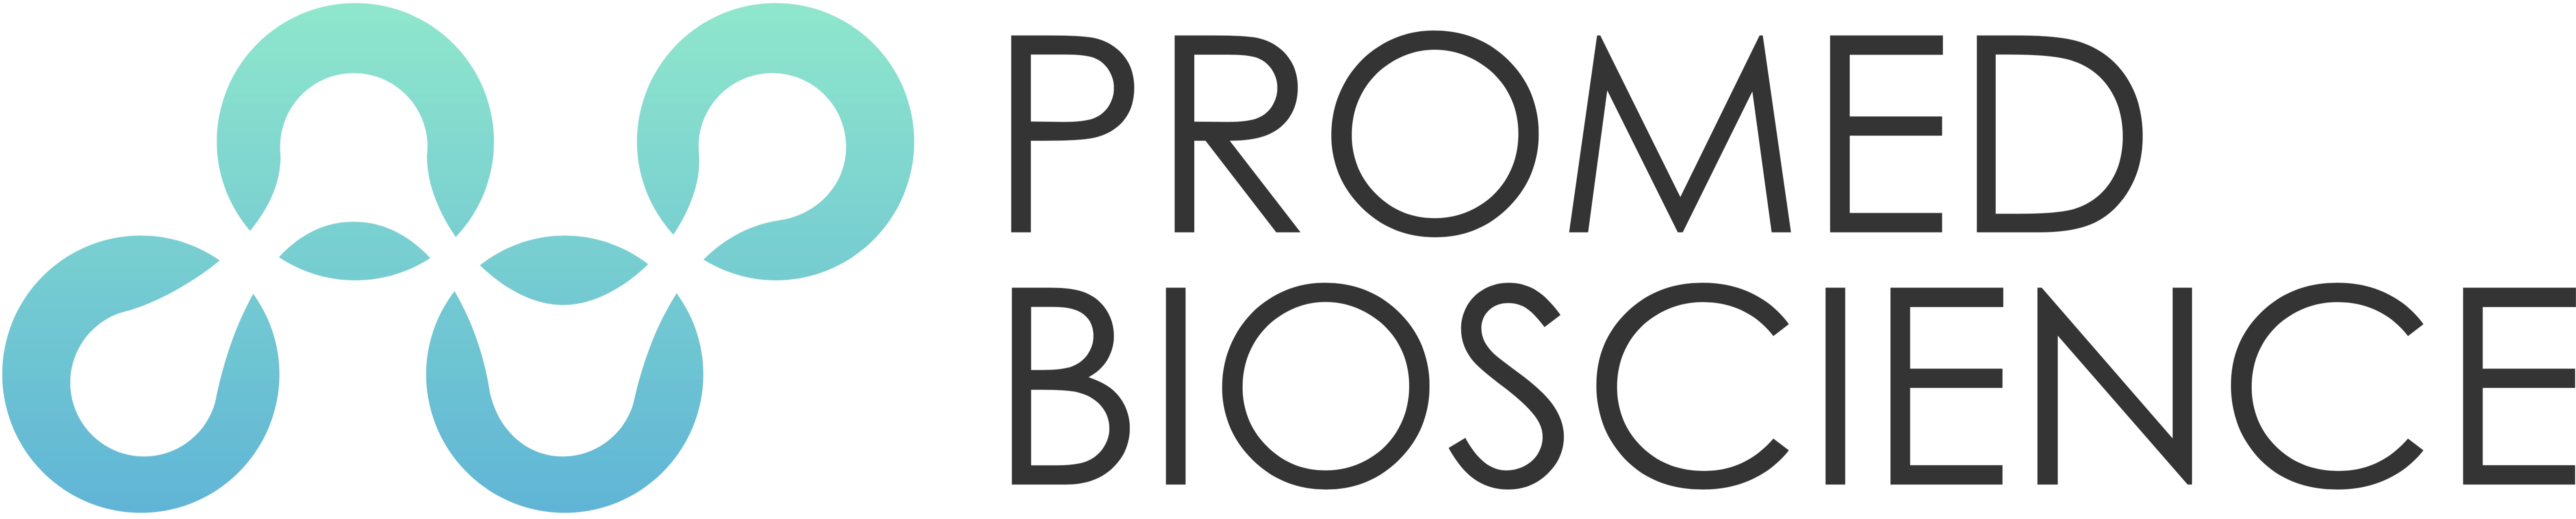 Jobs in Promed Bioscience Ltd